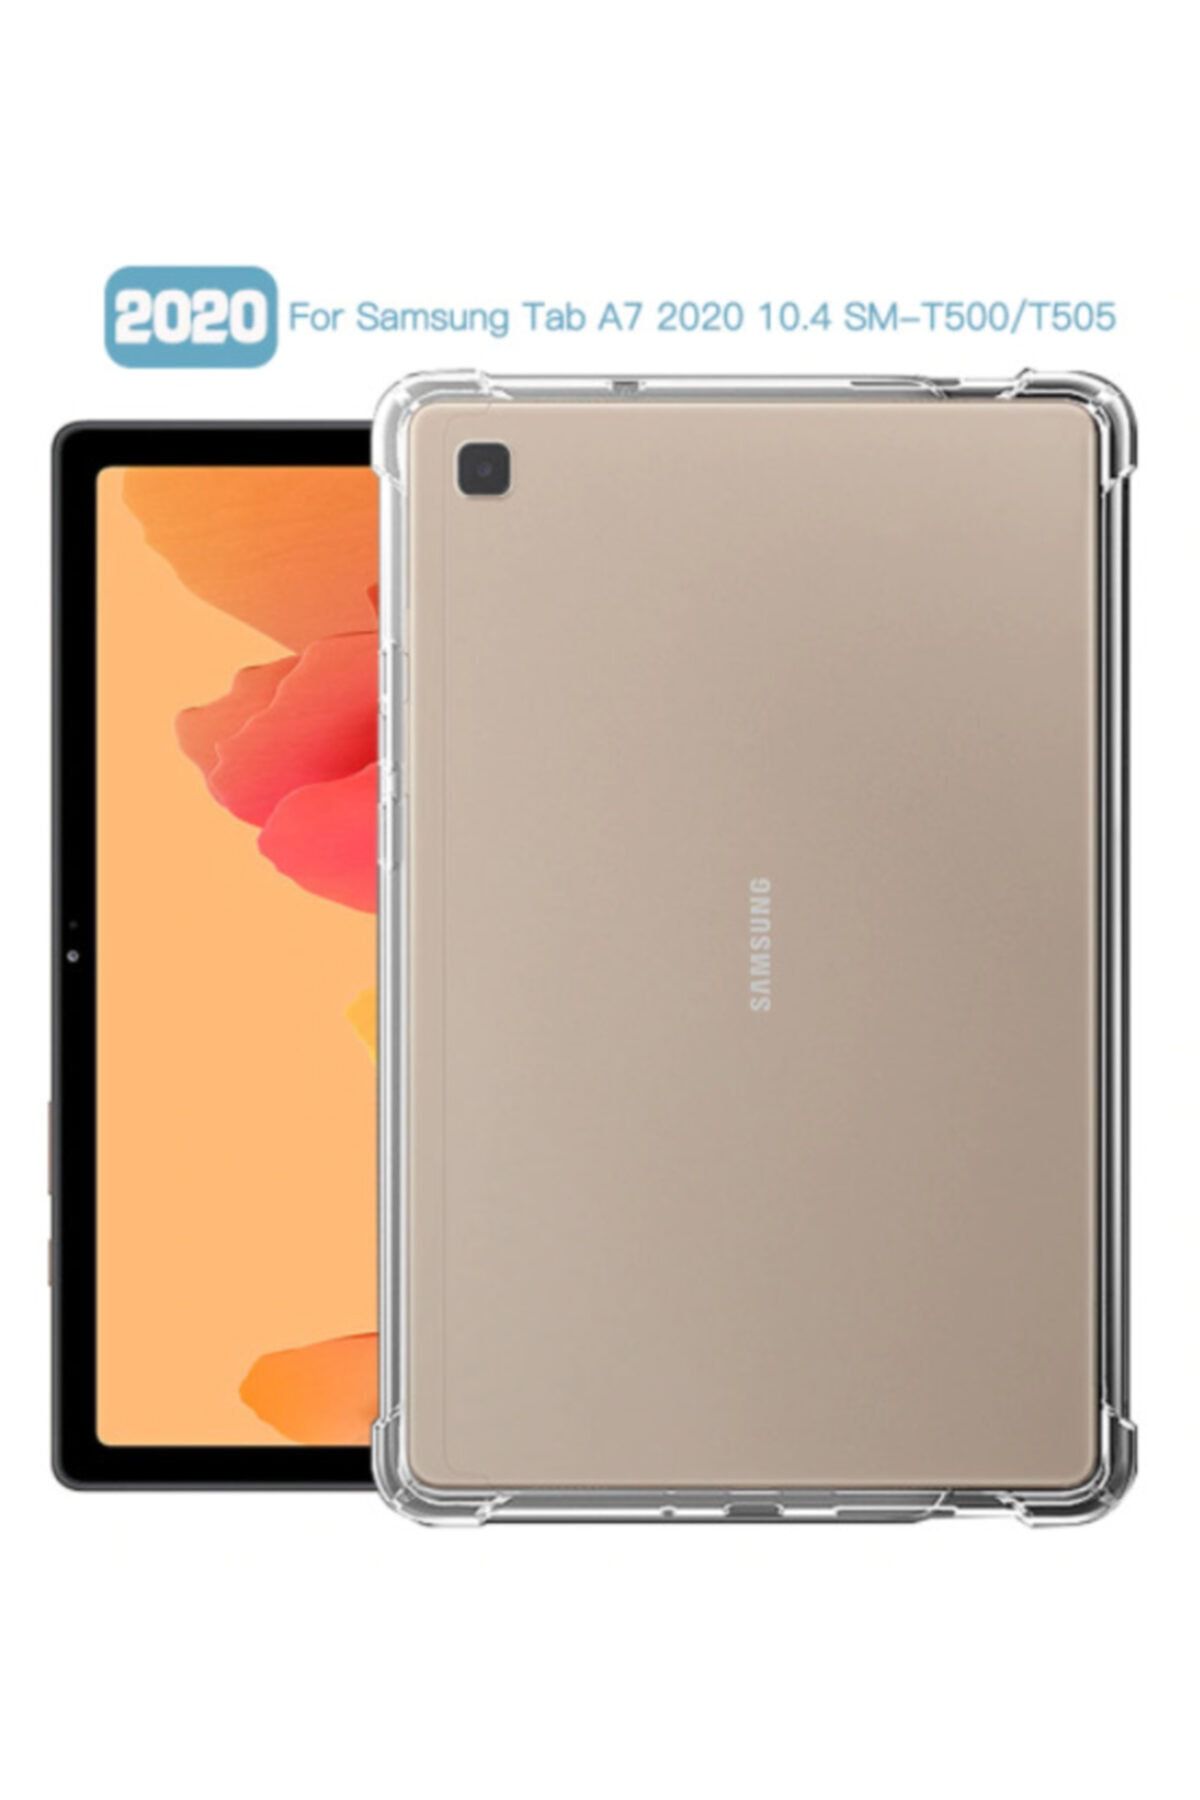 Samsung Galaxy Taba7 10.4 T500 2020 Kılıf Şok Emici Silikon Kapak